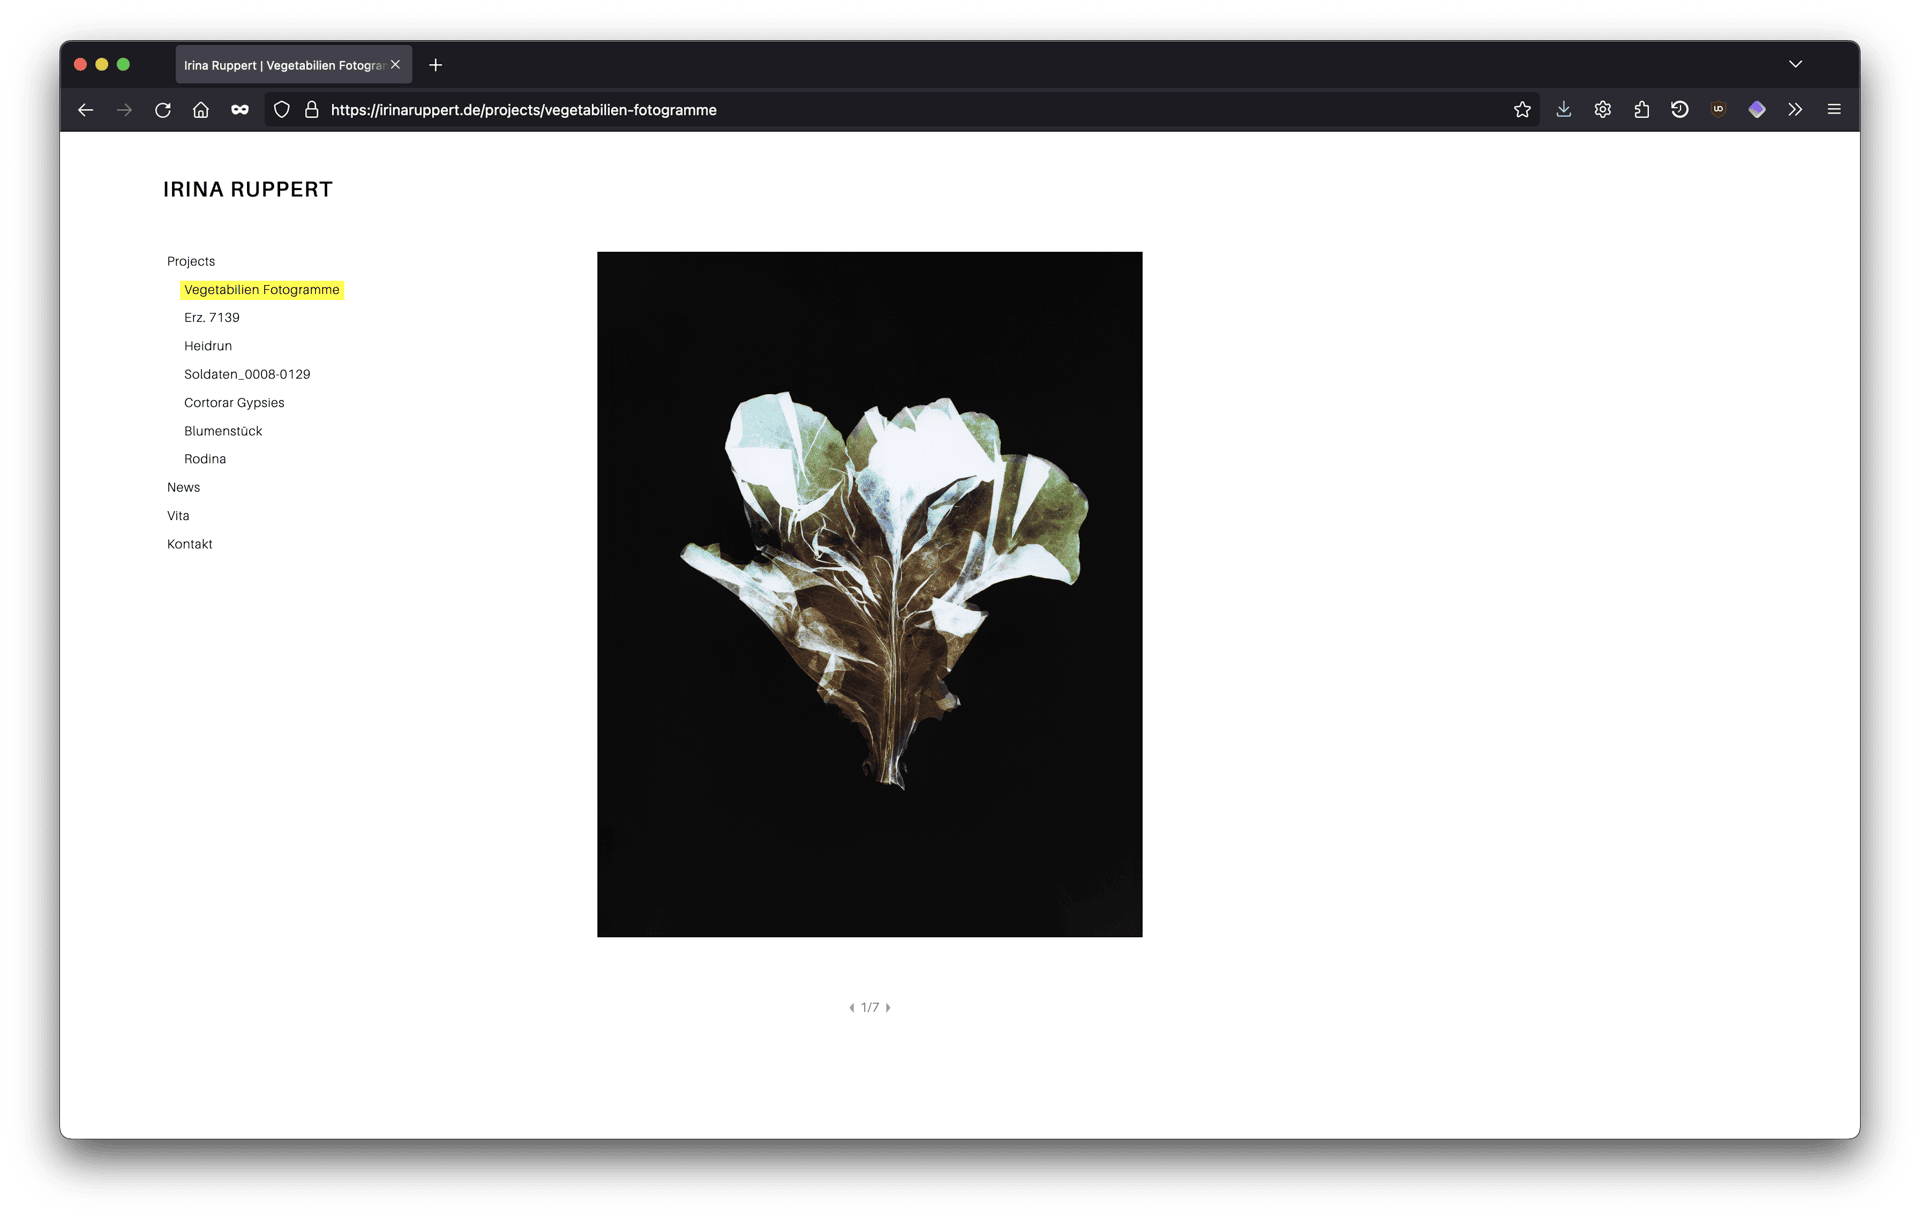 A screenshot of a website. It shows a photogramme of a salad and the menu bar of Irina Ruppert’s website on the left.